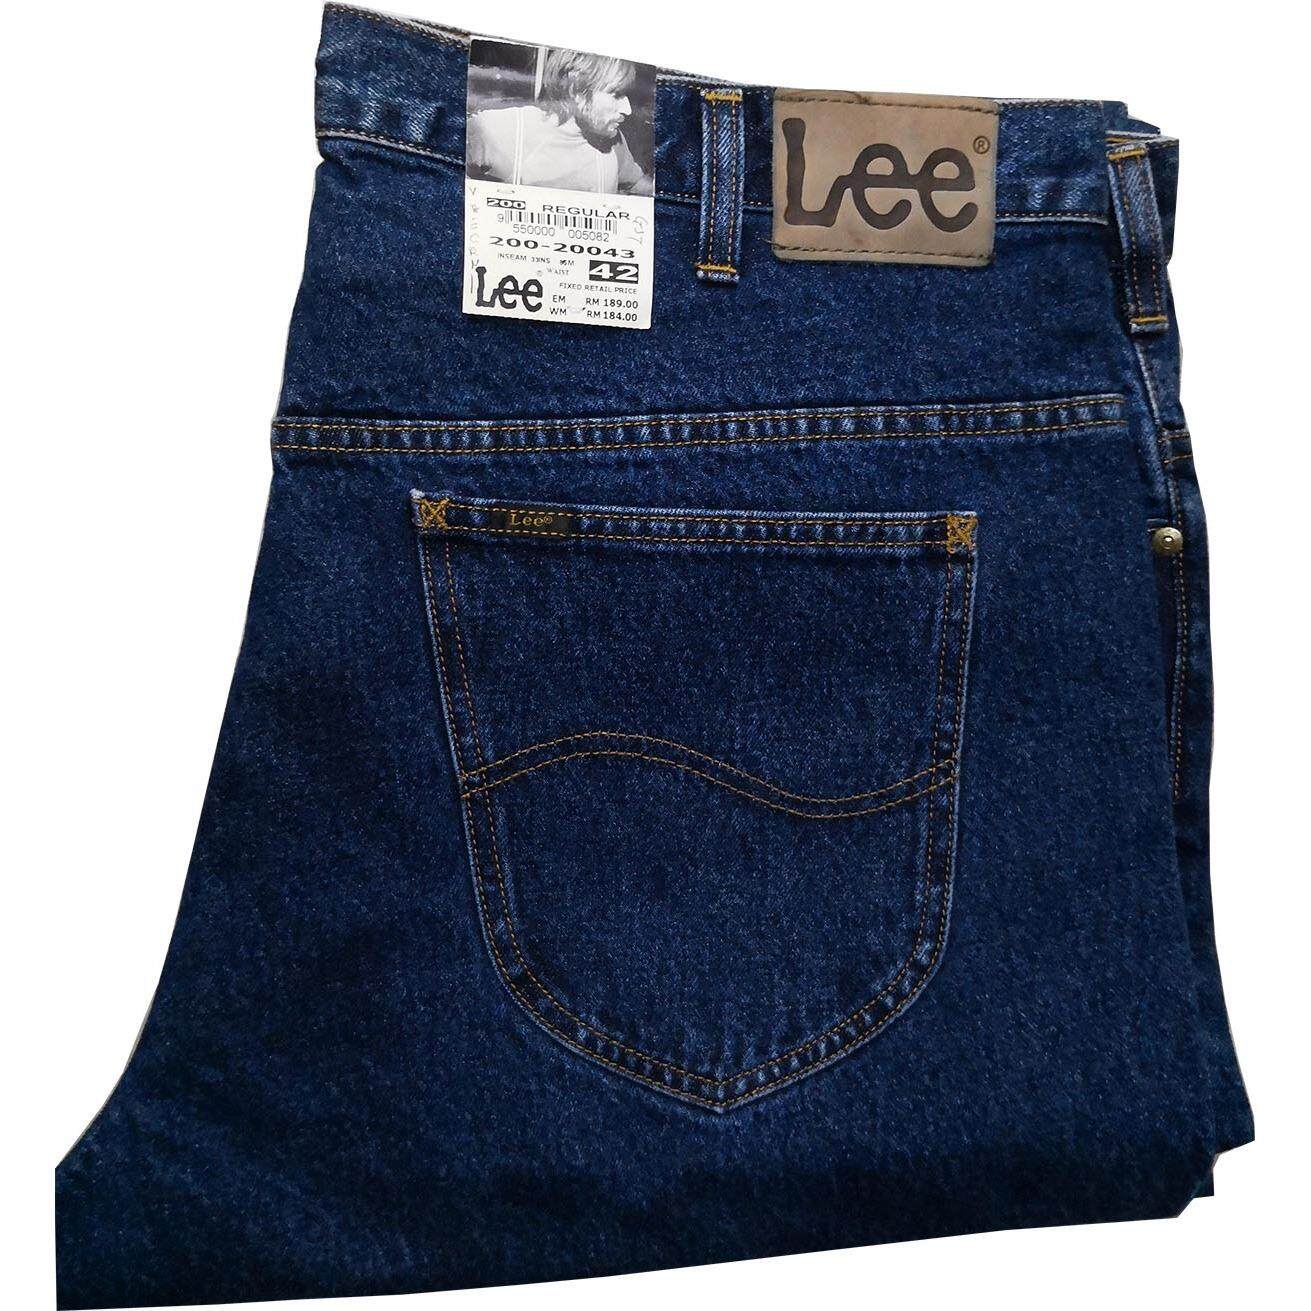 lee brand jeans price